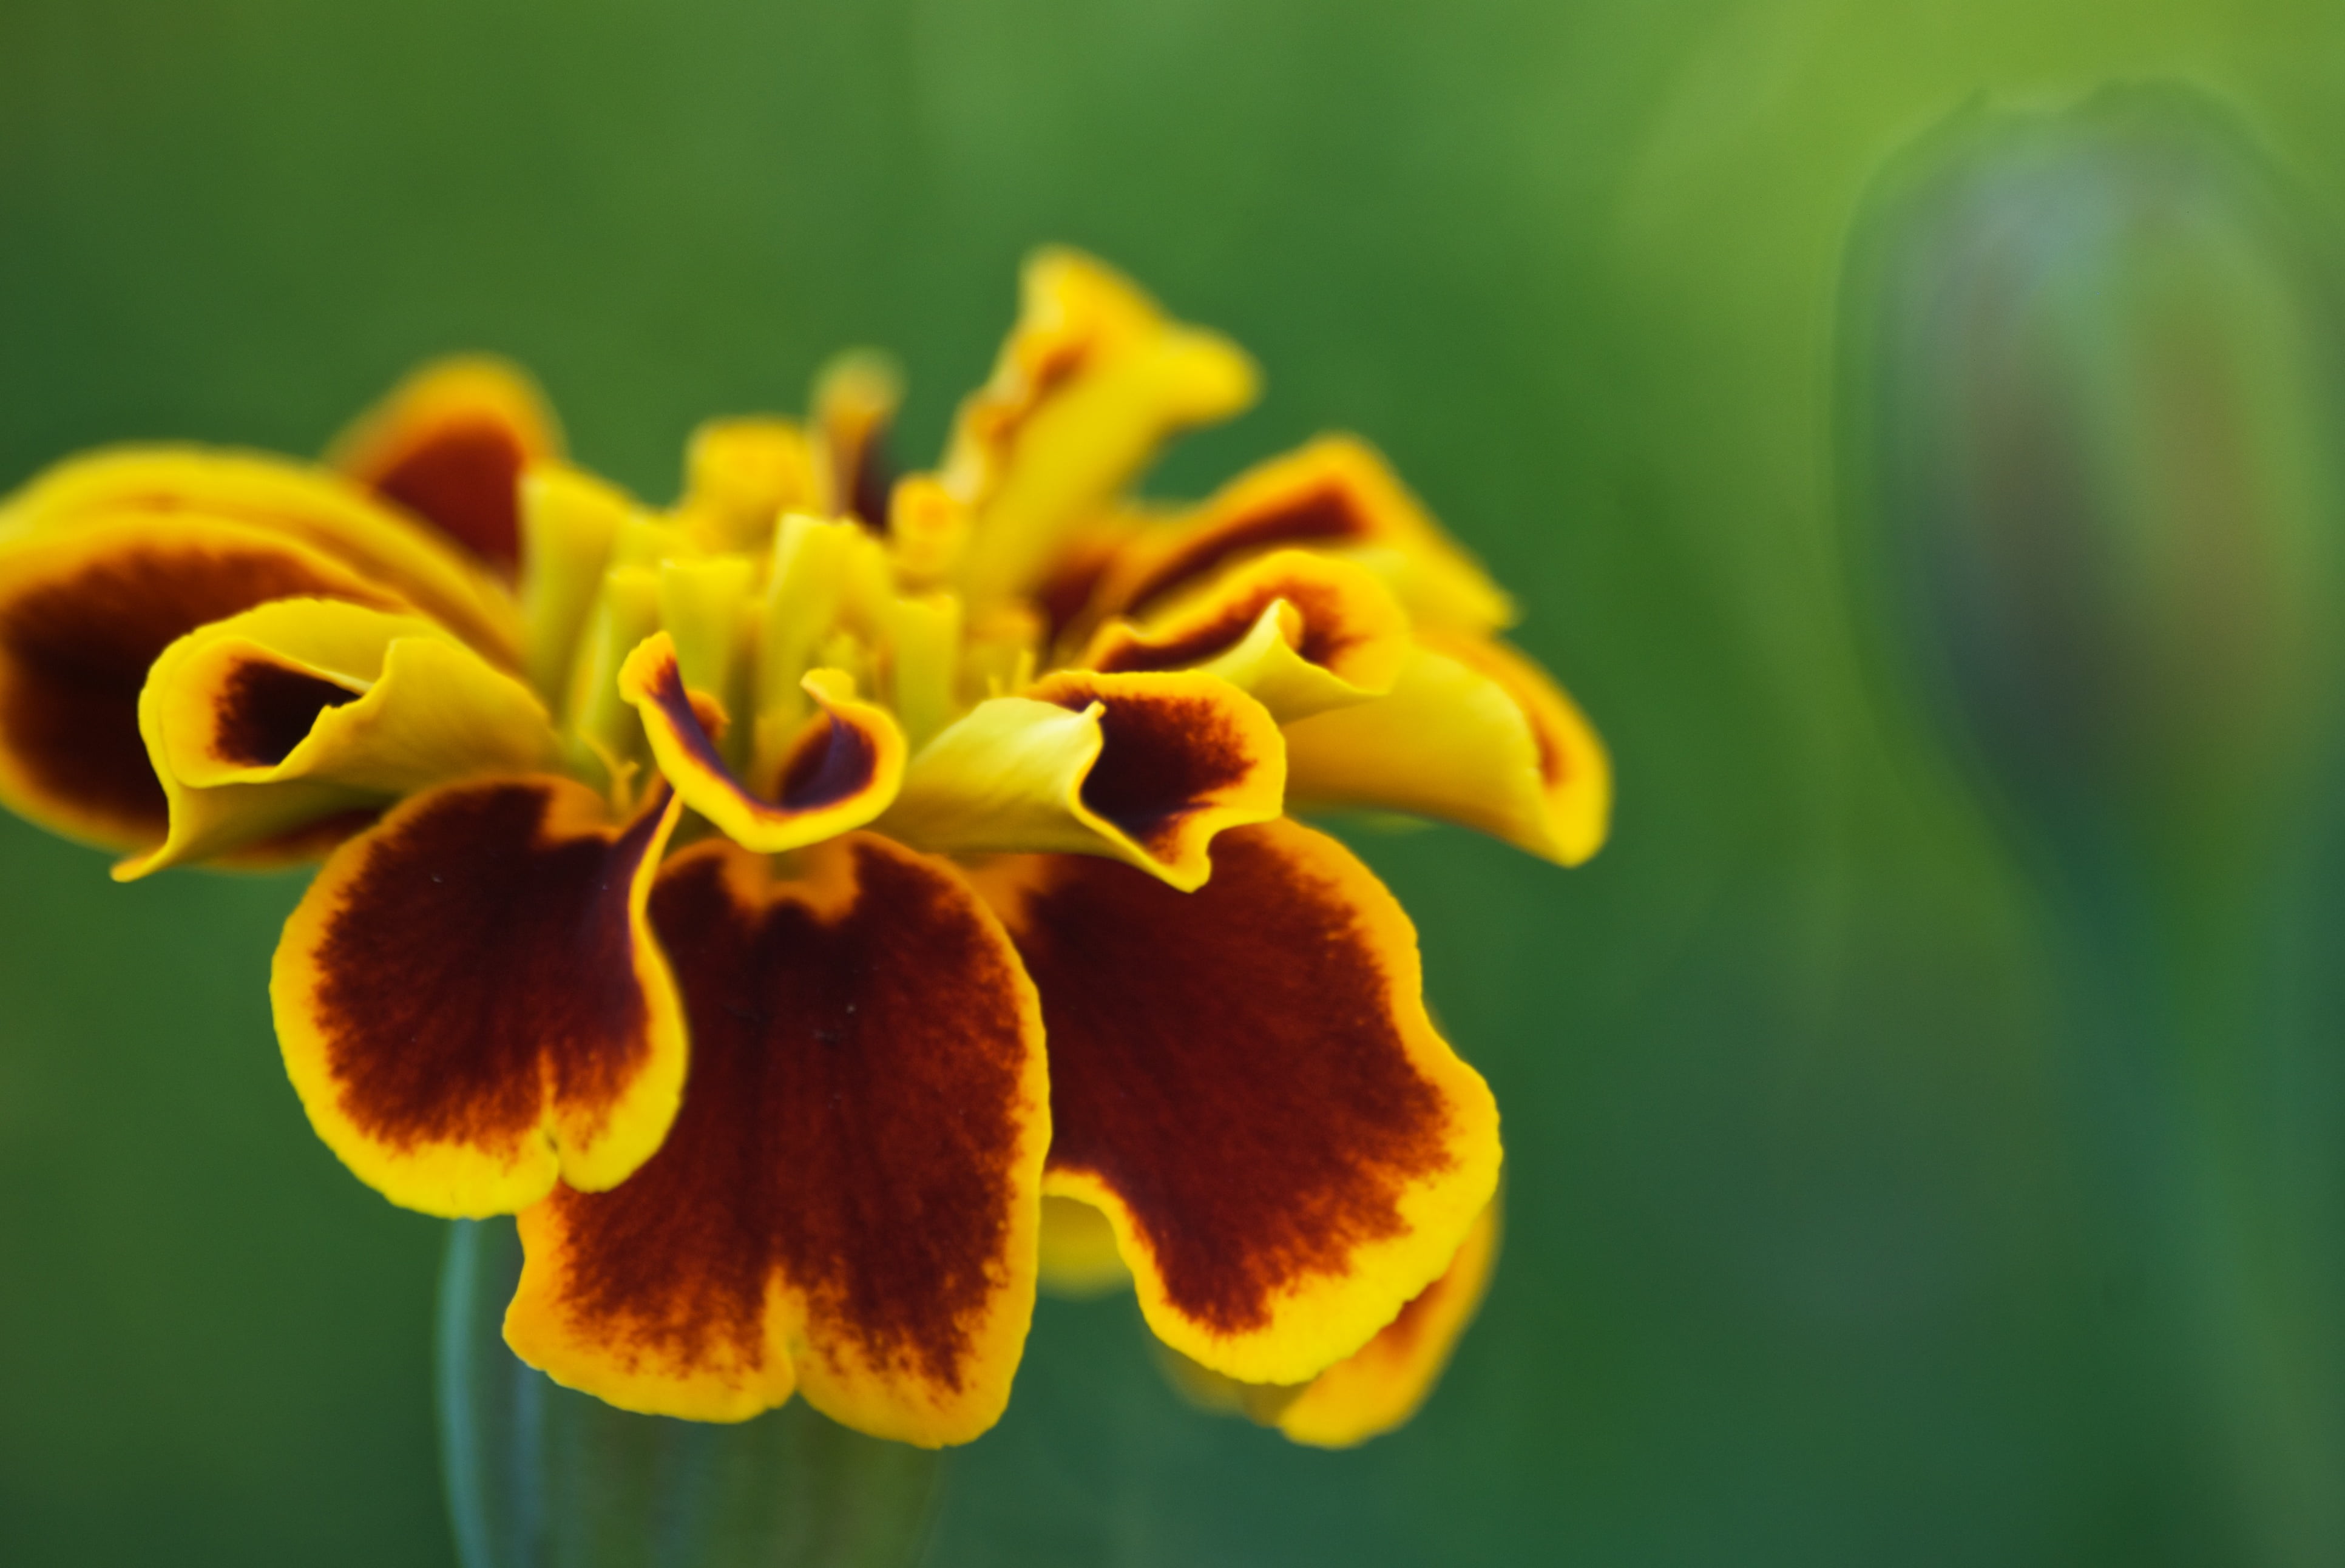 bokeh photography of yellow flower